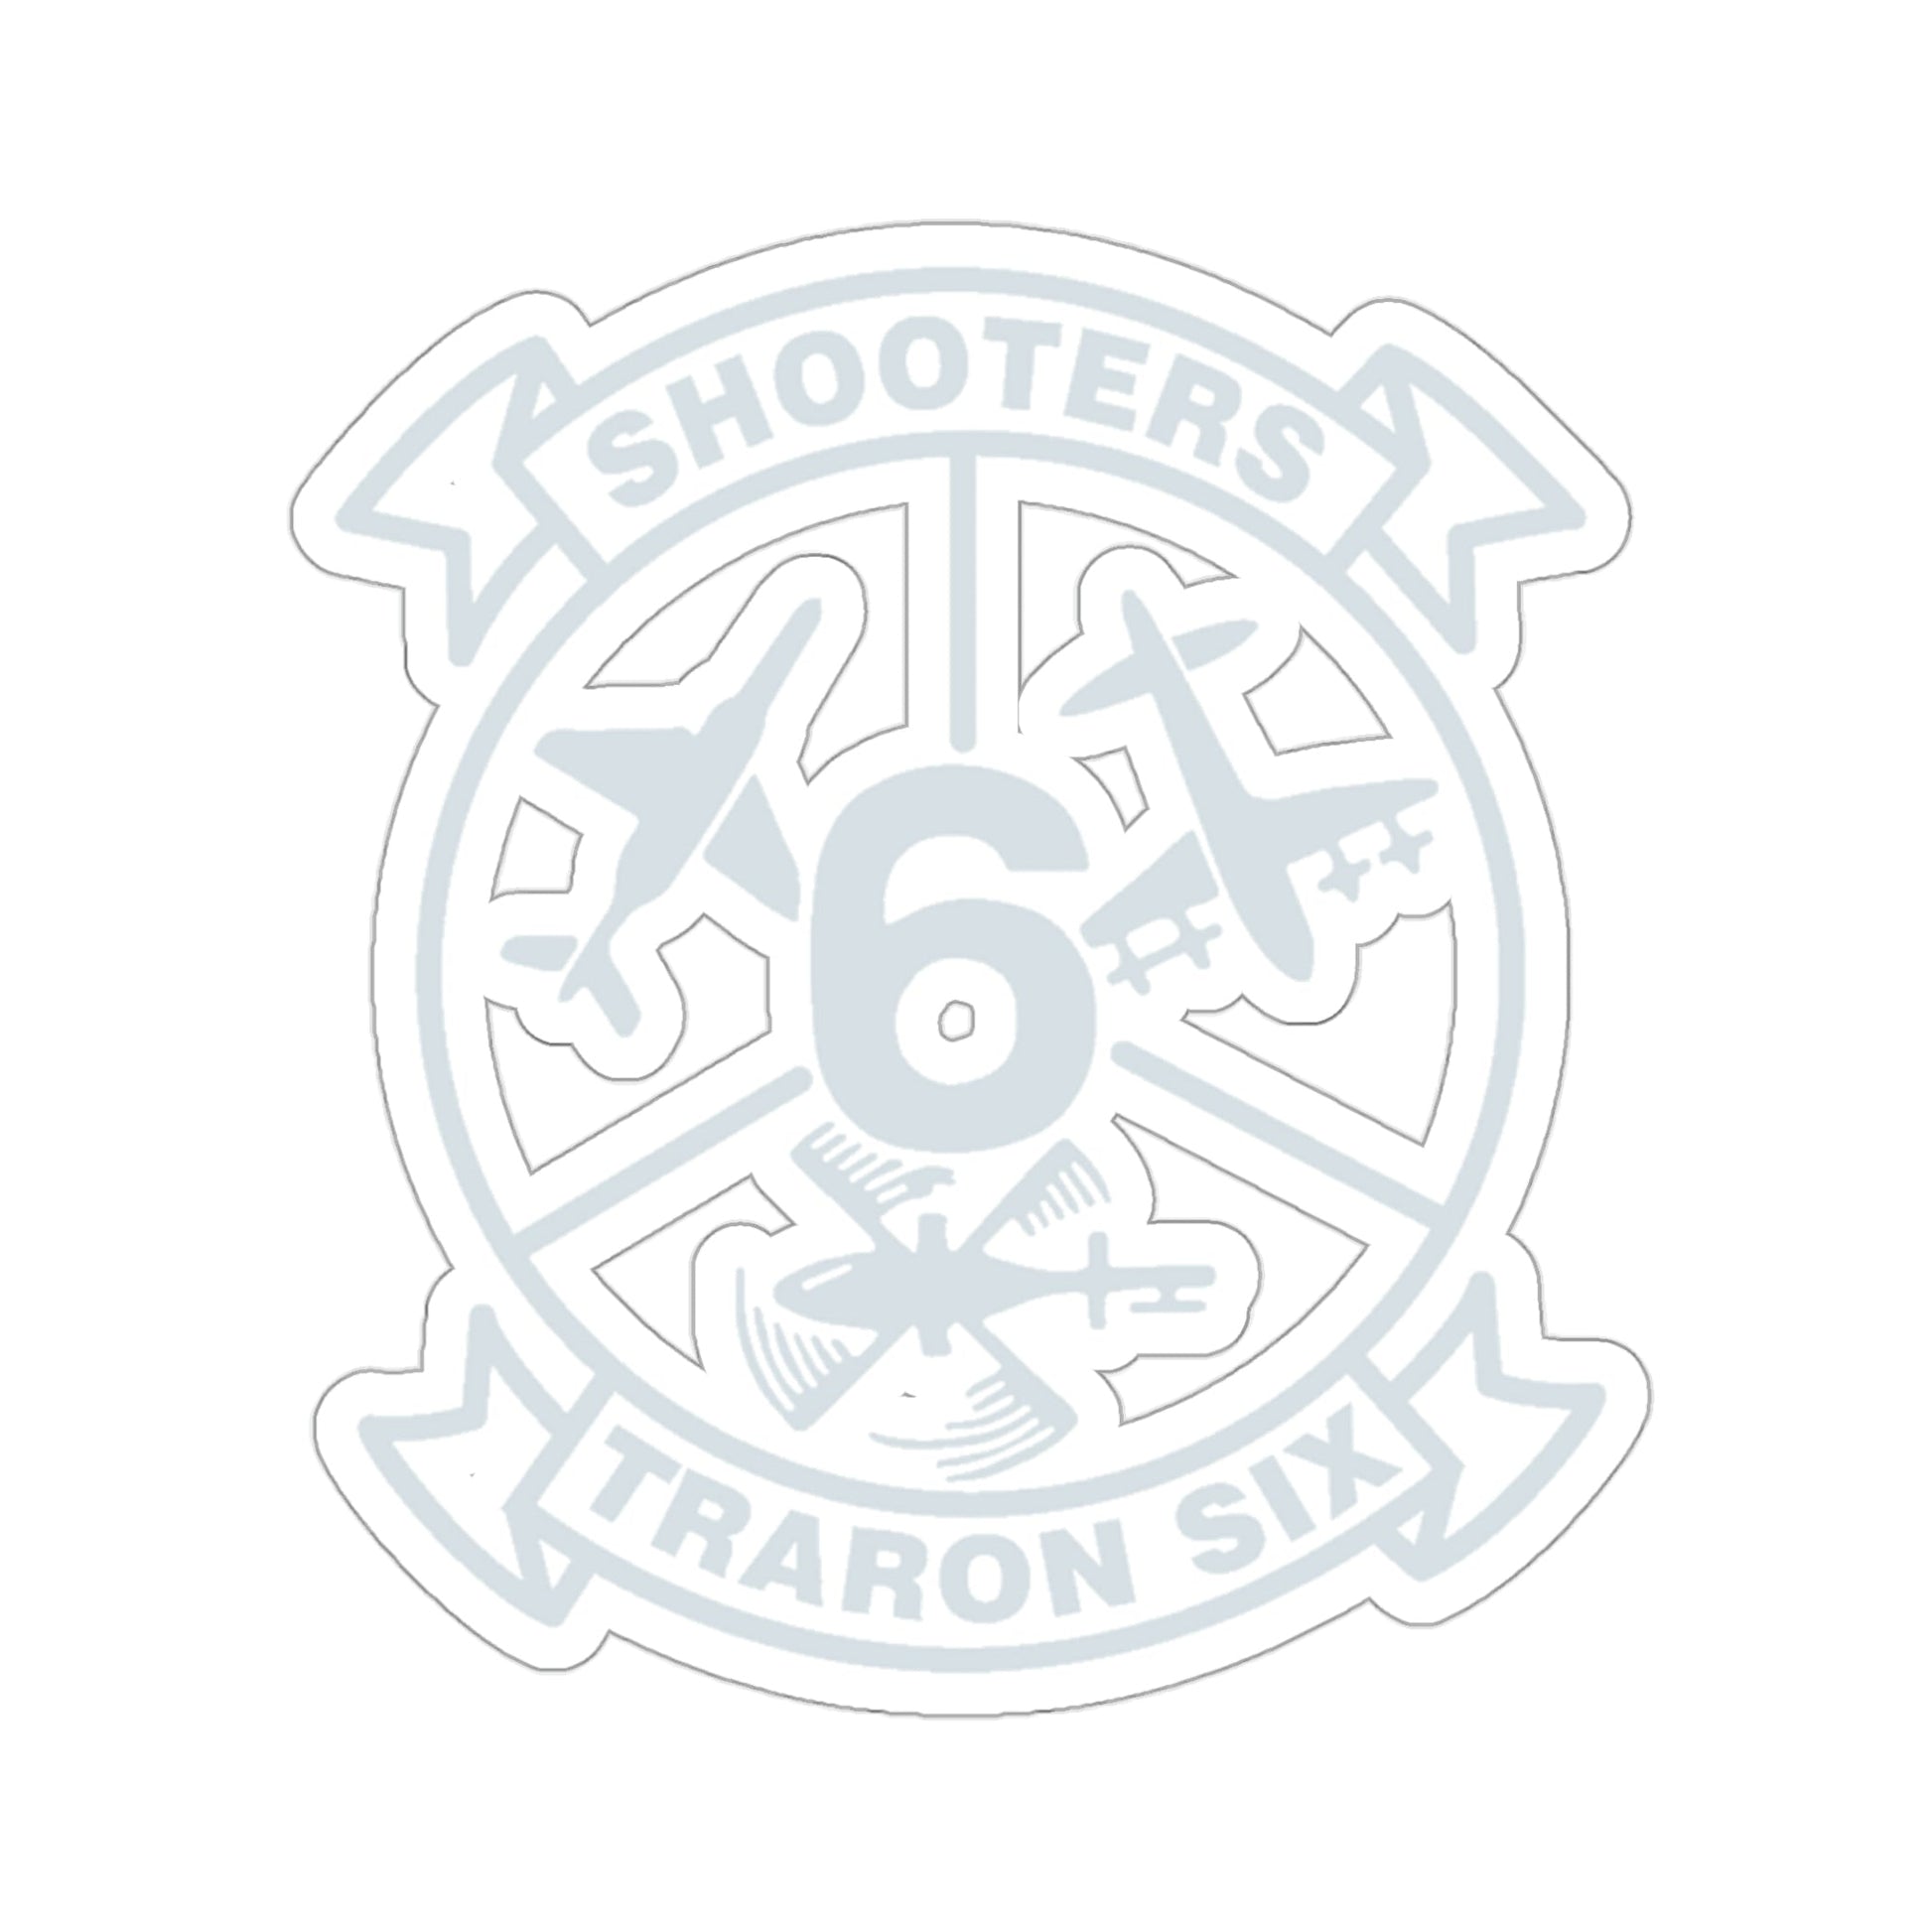 VT 6 TRARON VT6 Shooters (U.S. Navy) STICKER Vinyl Die-Cut Decal-3 Inch-The Sticker Space